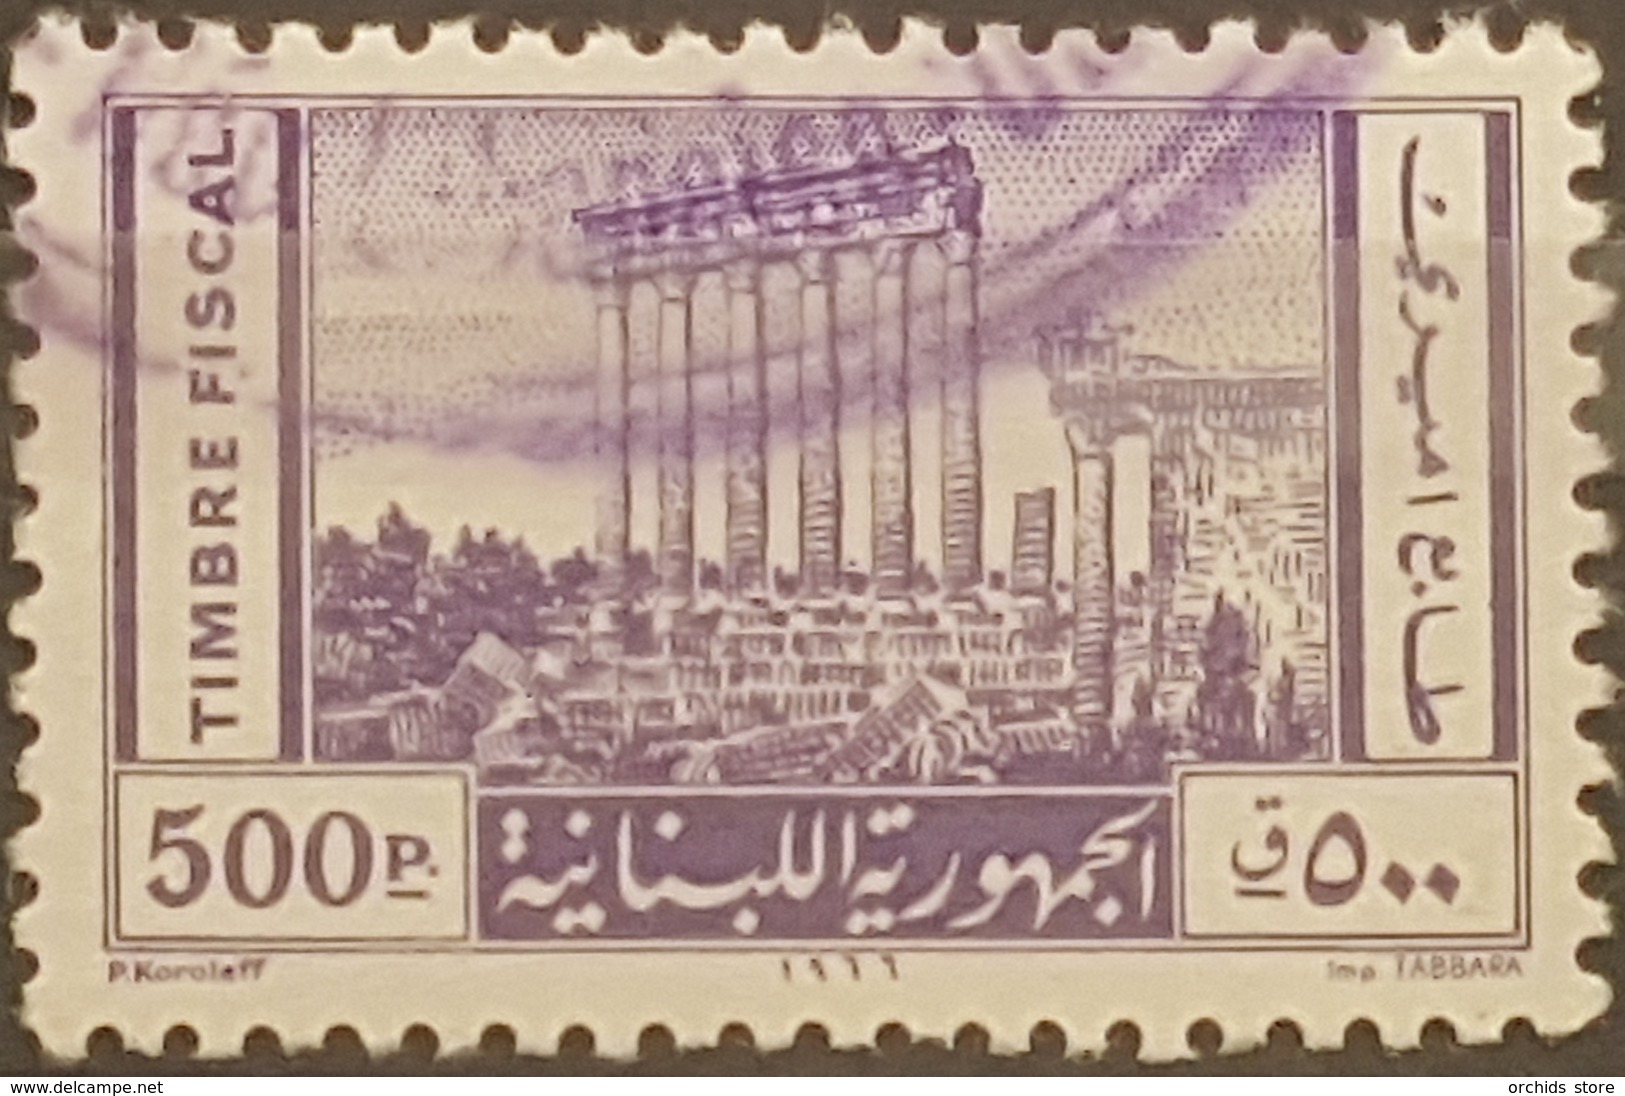 Lebanon 1966 Fiscal Revenue Stamp 500p Baalbeck Design - Lebanon